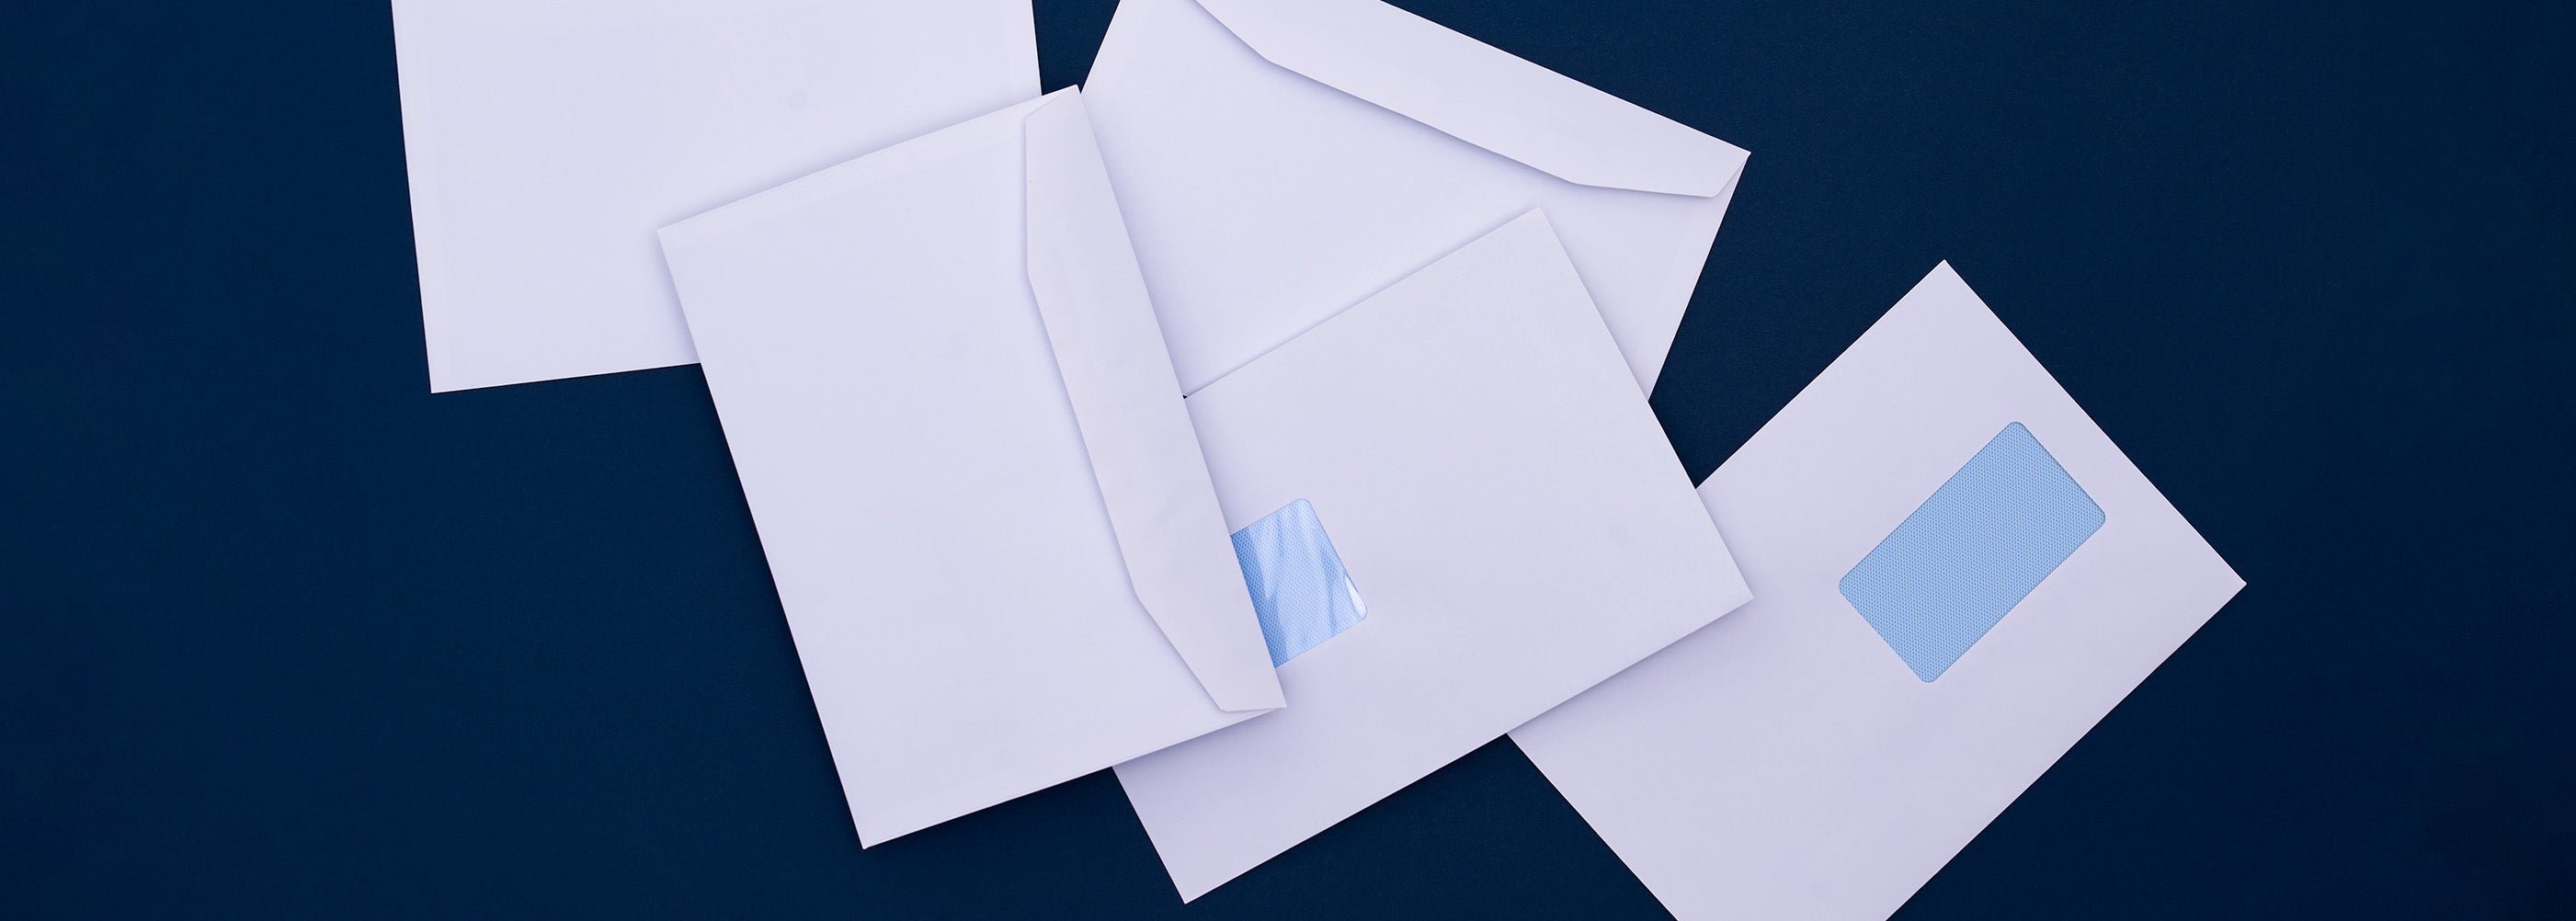 articles/windowed-envelopes.jpg